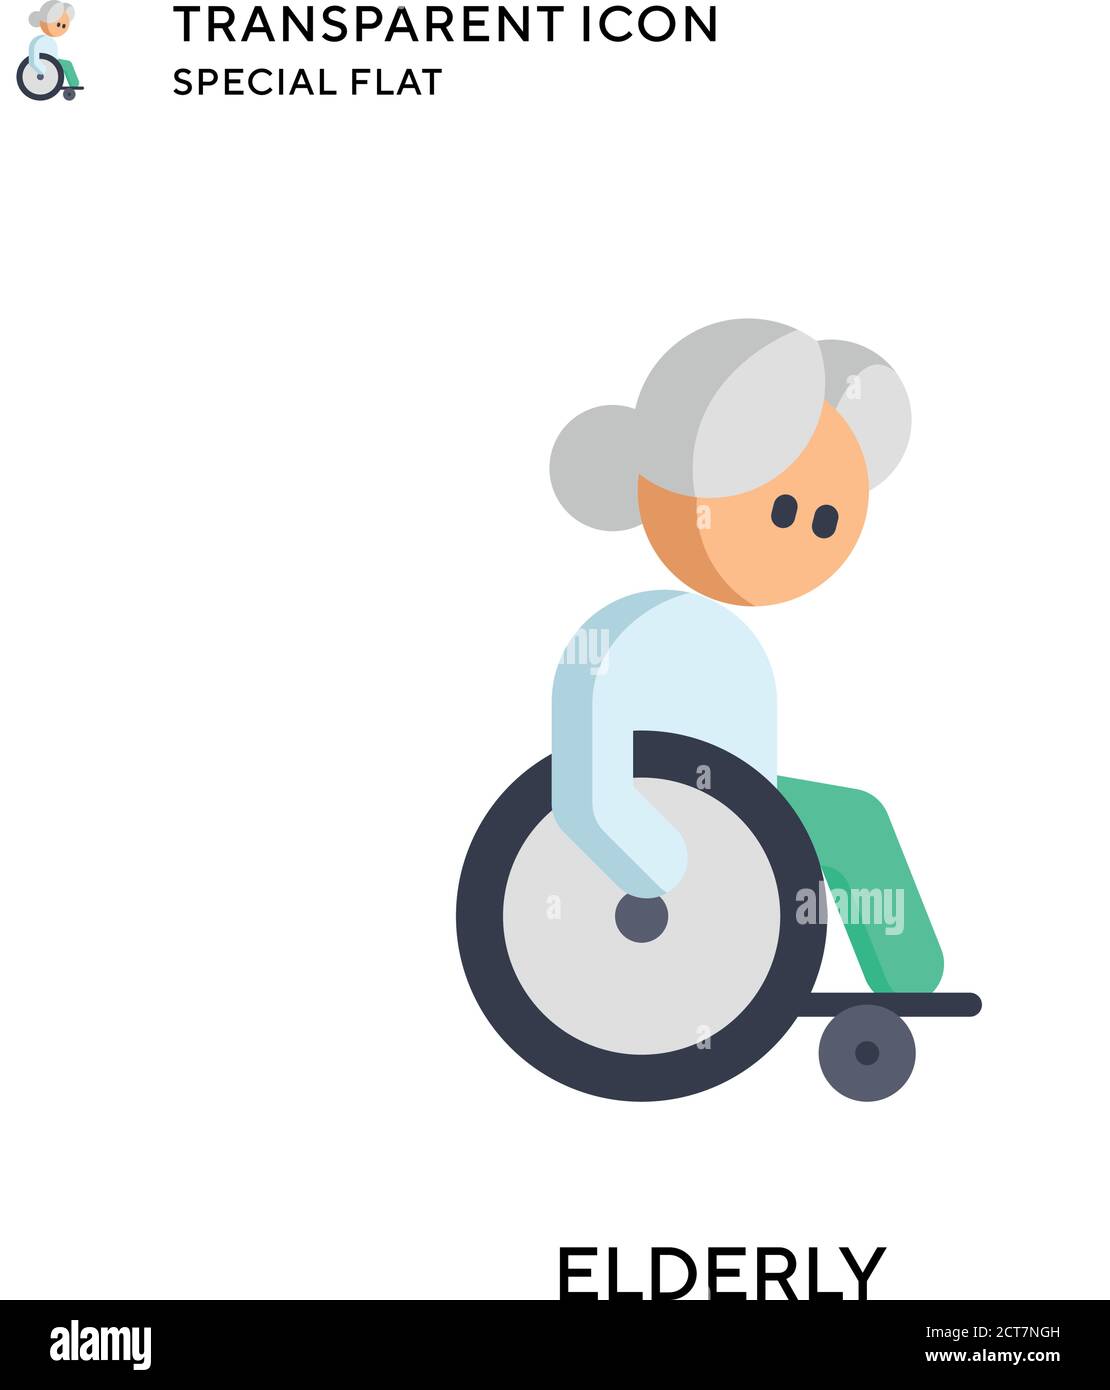 Elderly vector icon. Flat style illustration. EPS 10 vector. Stock Vector